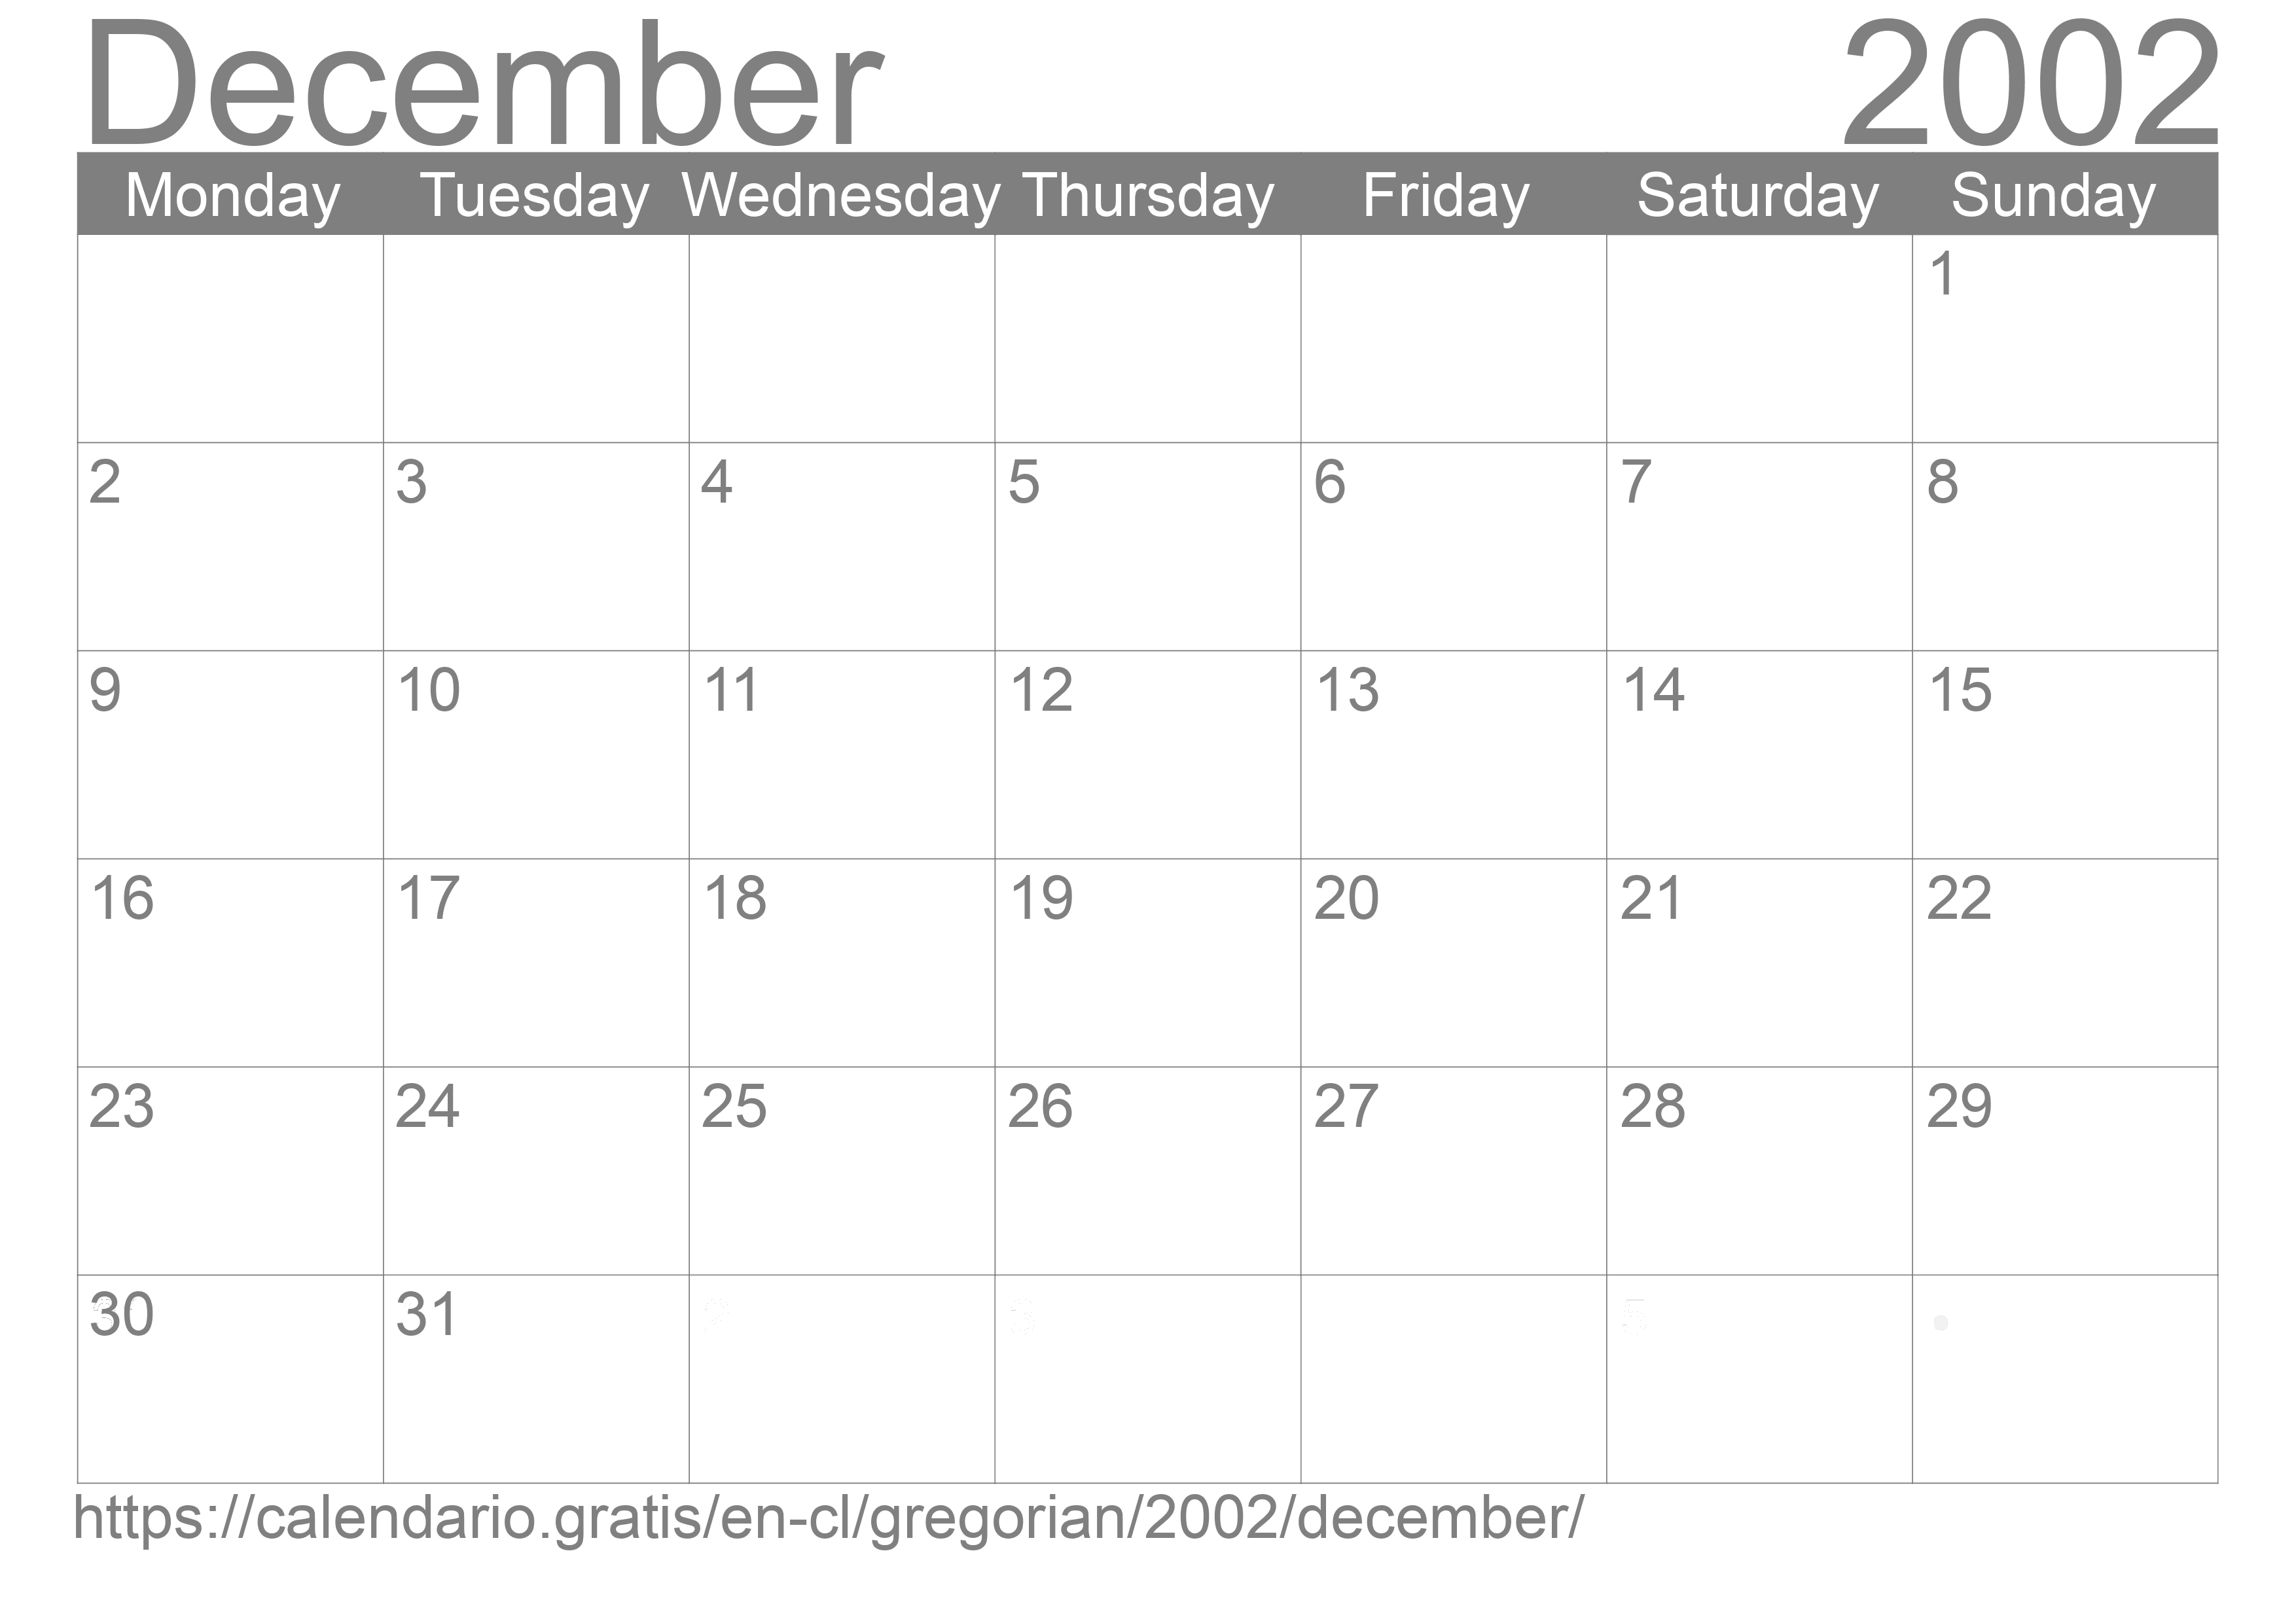 Calendar December 2002 to print